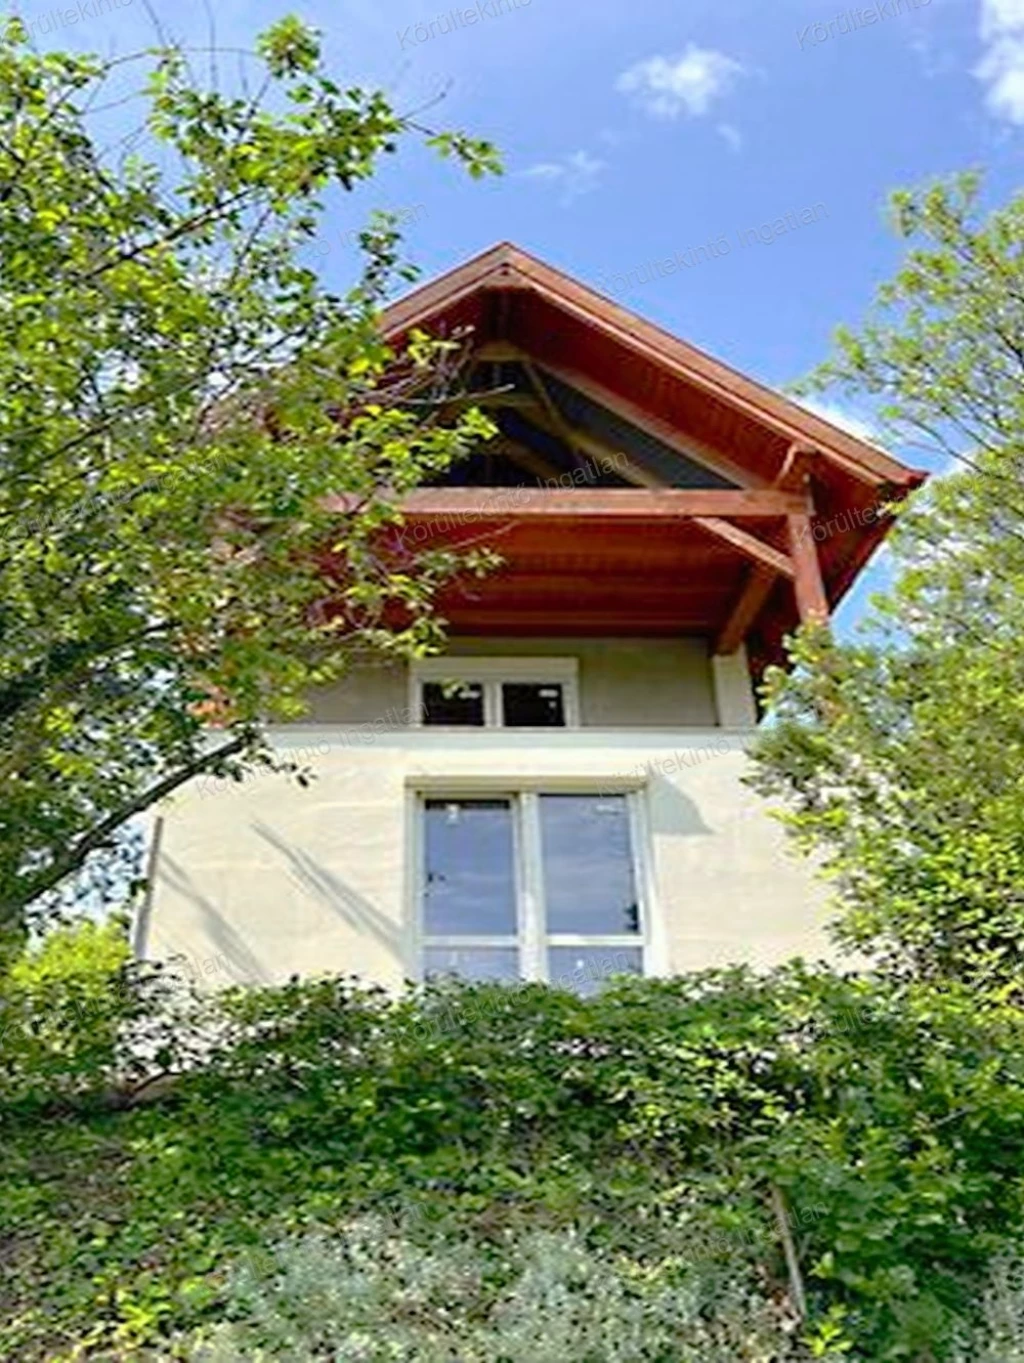 For sale house, Sukoró, Üdülőfalu, Körmös utca